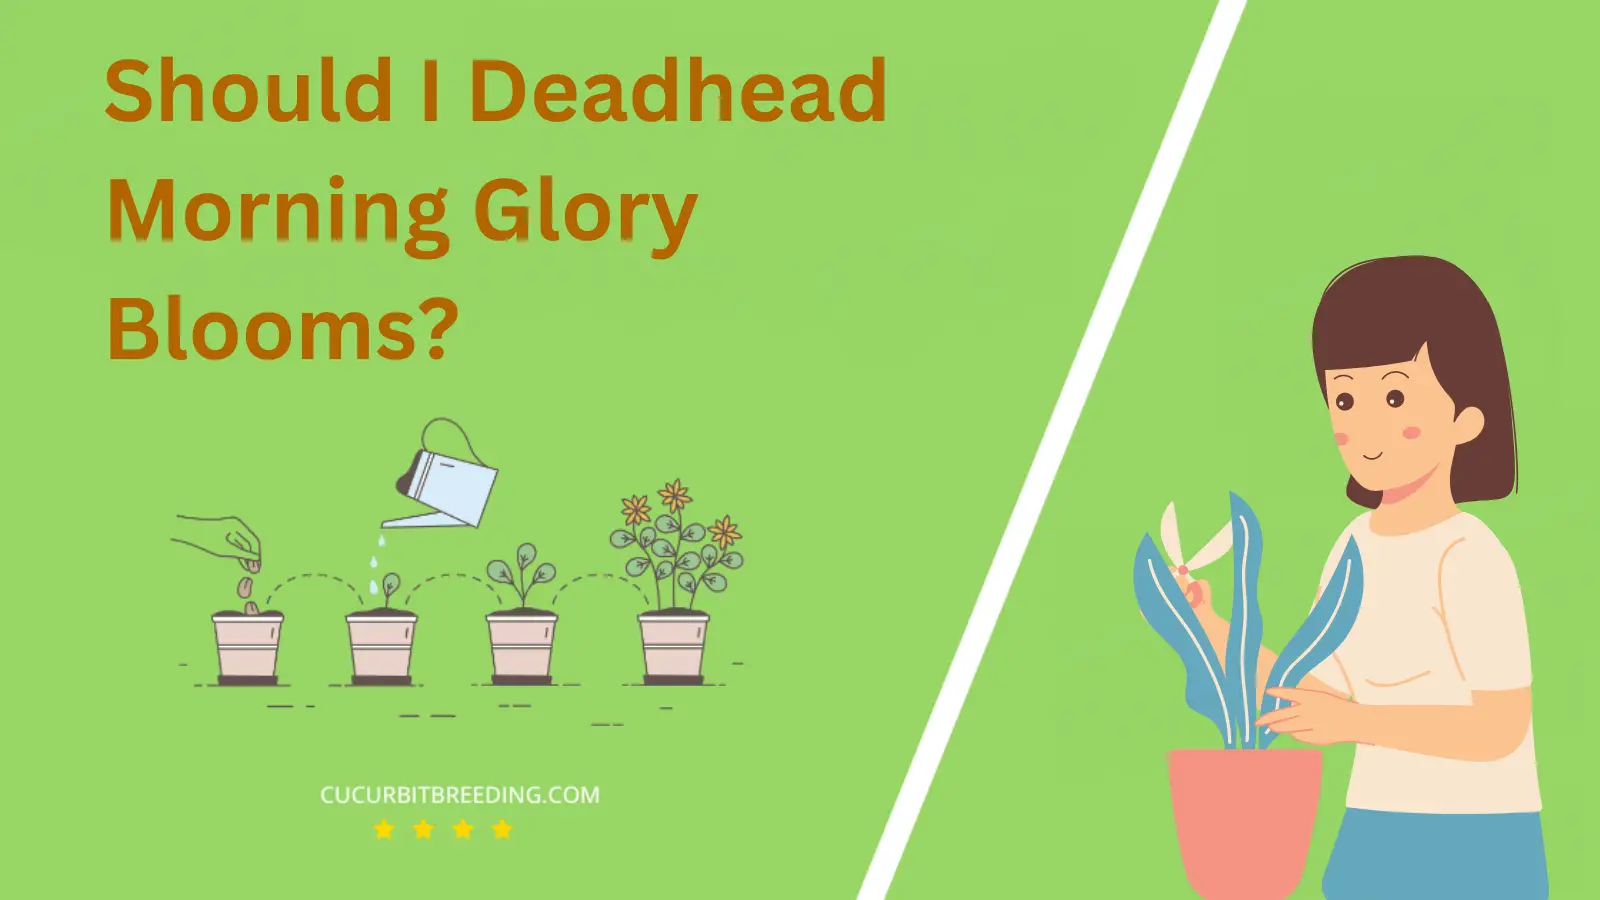 Should I Deadhead Morning Glory Blooms?